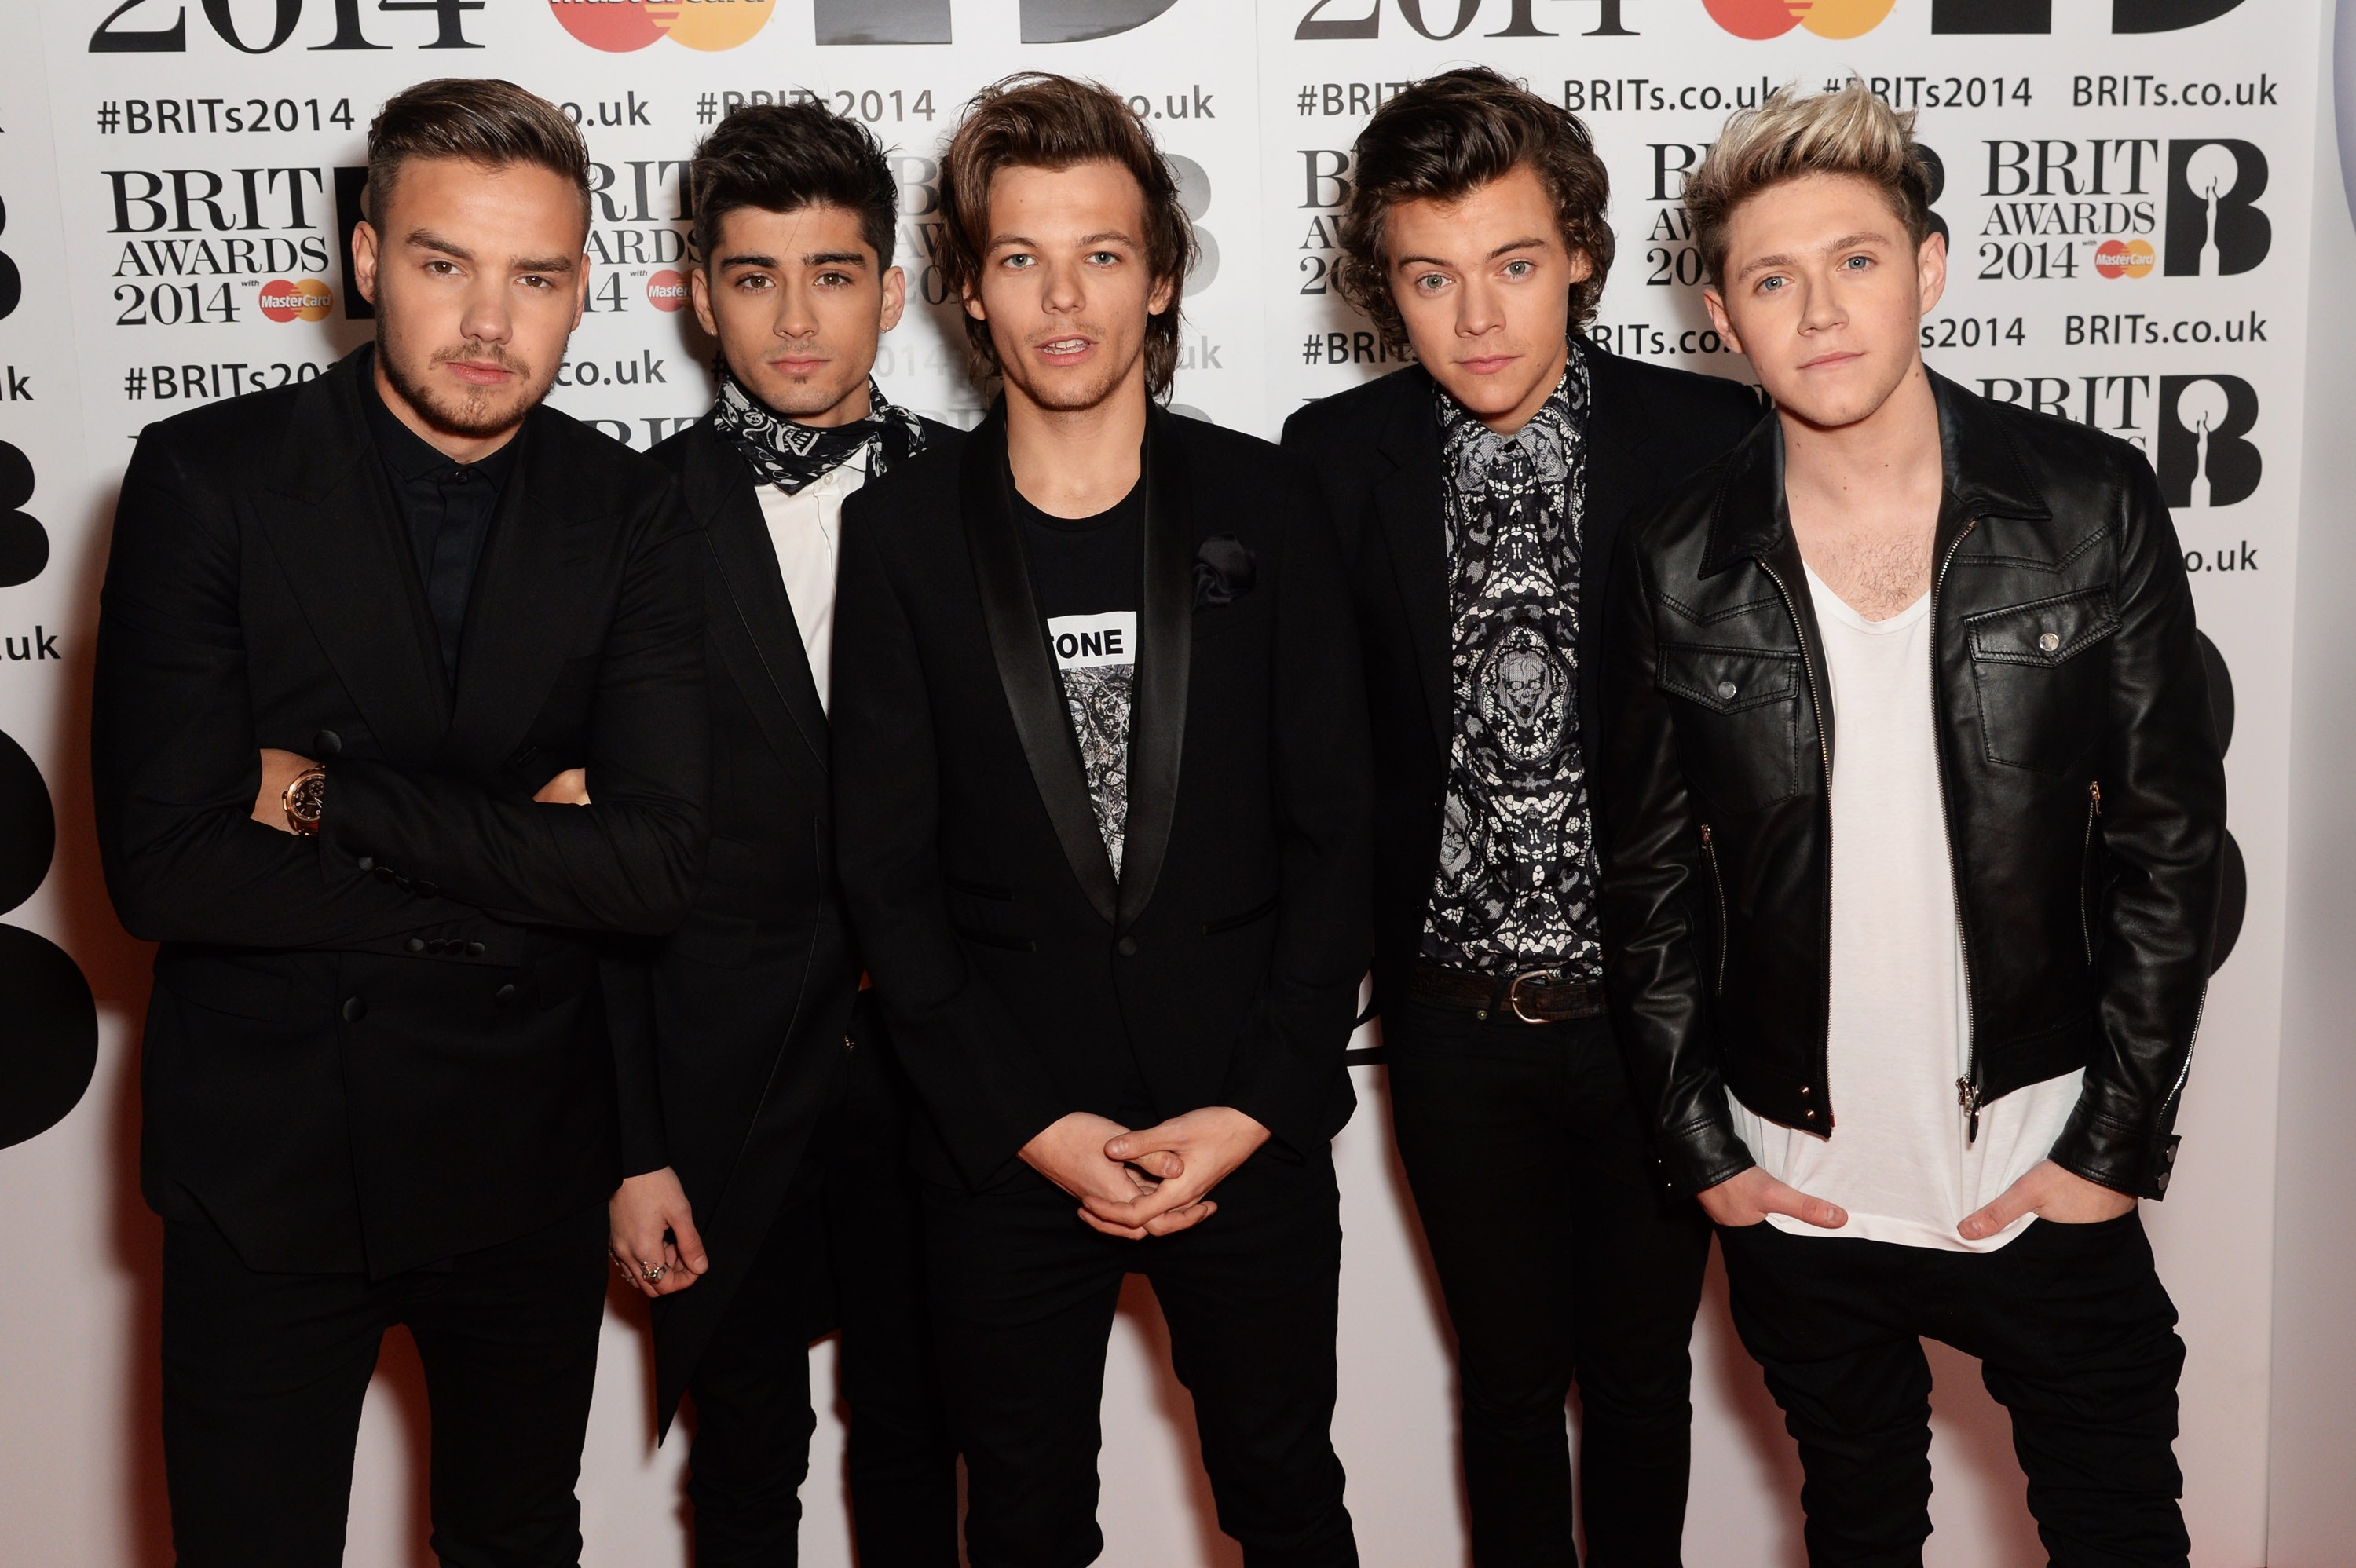 One Direction (Band): The BRIT Awards 2014, Teen idols, An English-Irish group. 3000x2000 HD Wallpaper.